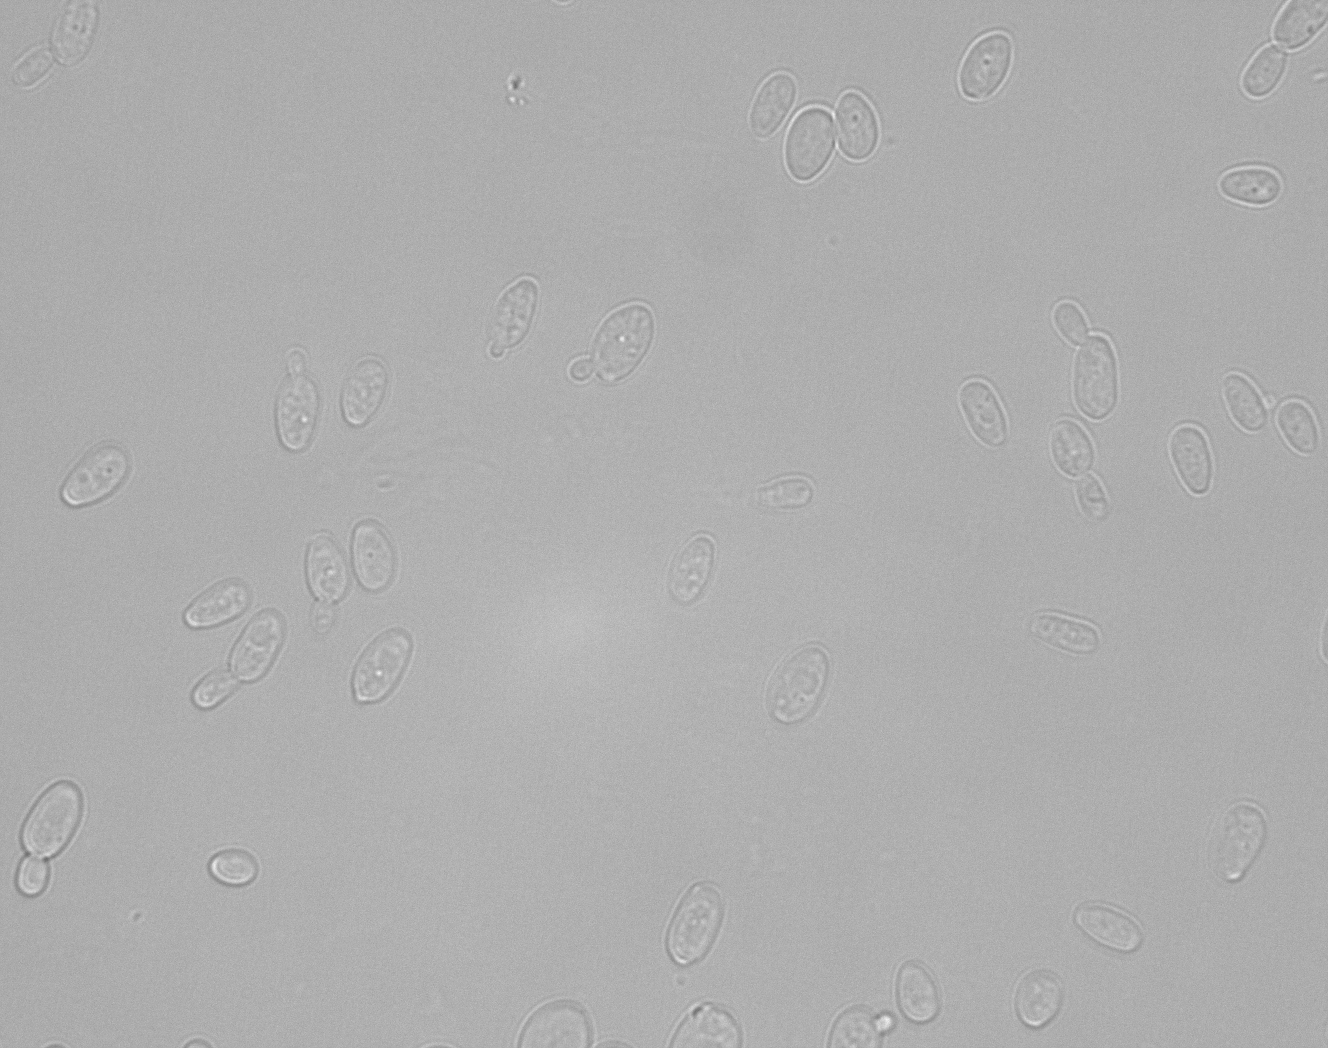 Scheffersomyces virginianus NRRL Y-48822T. Photo credit: Katharina Barros, David Krause, Chris Hittinger 